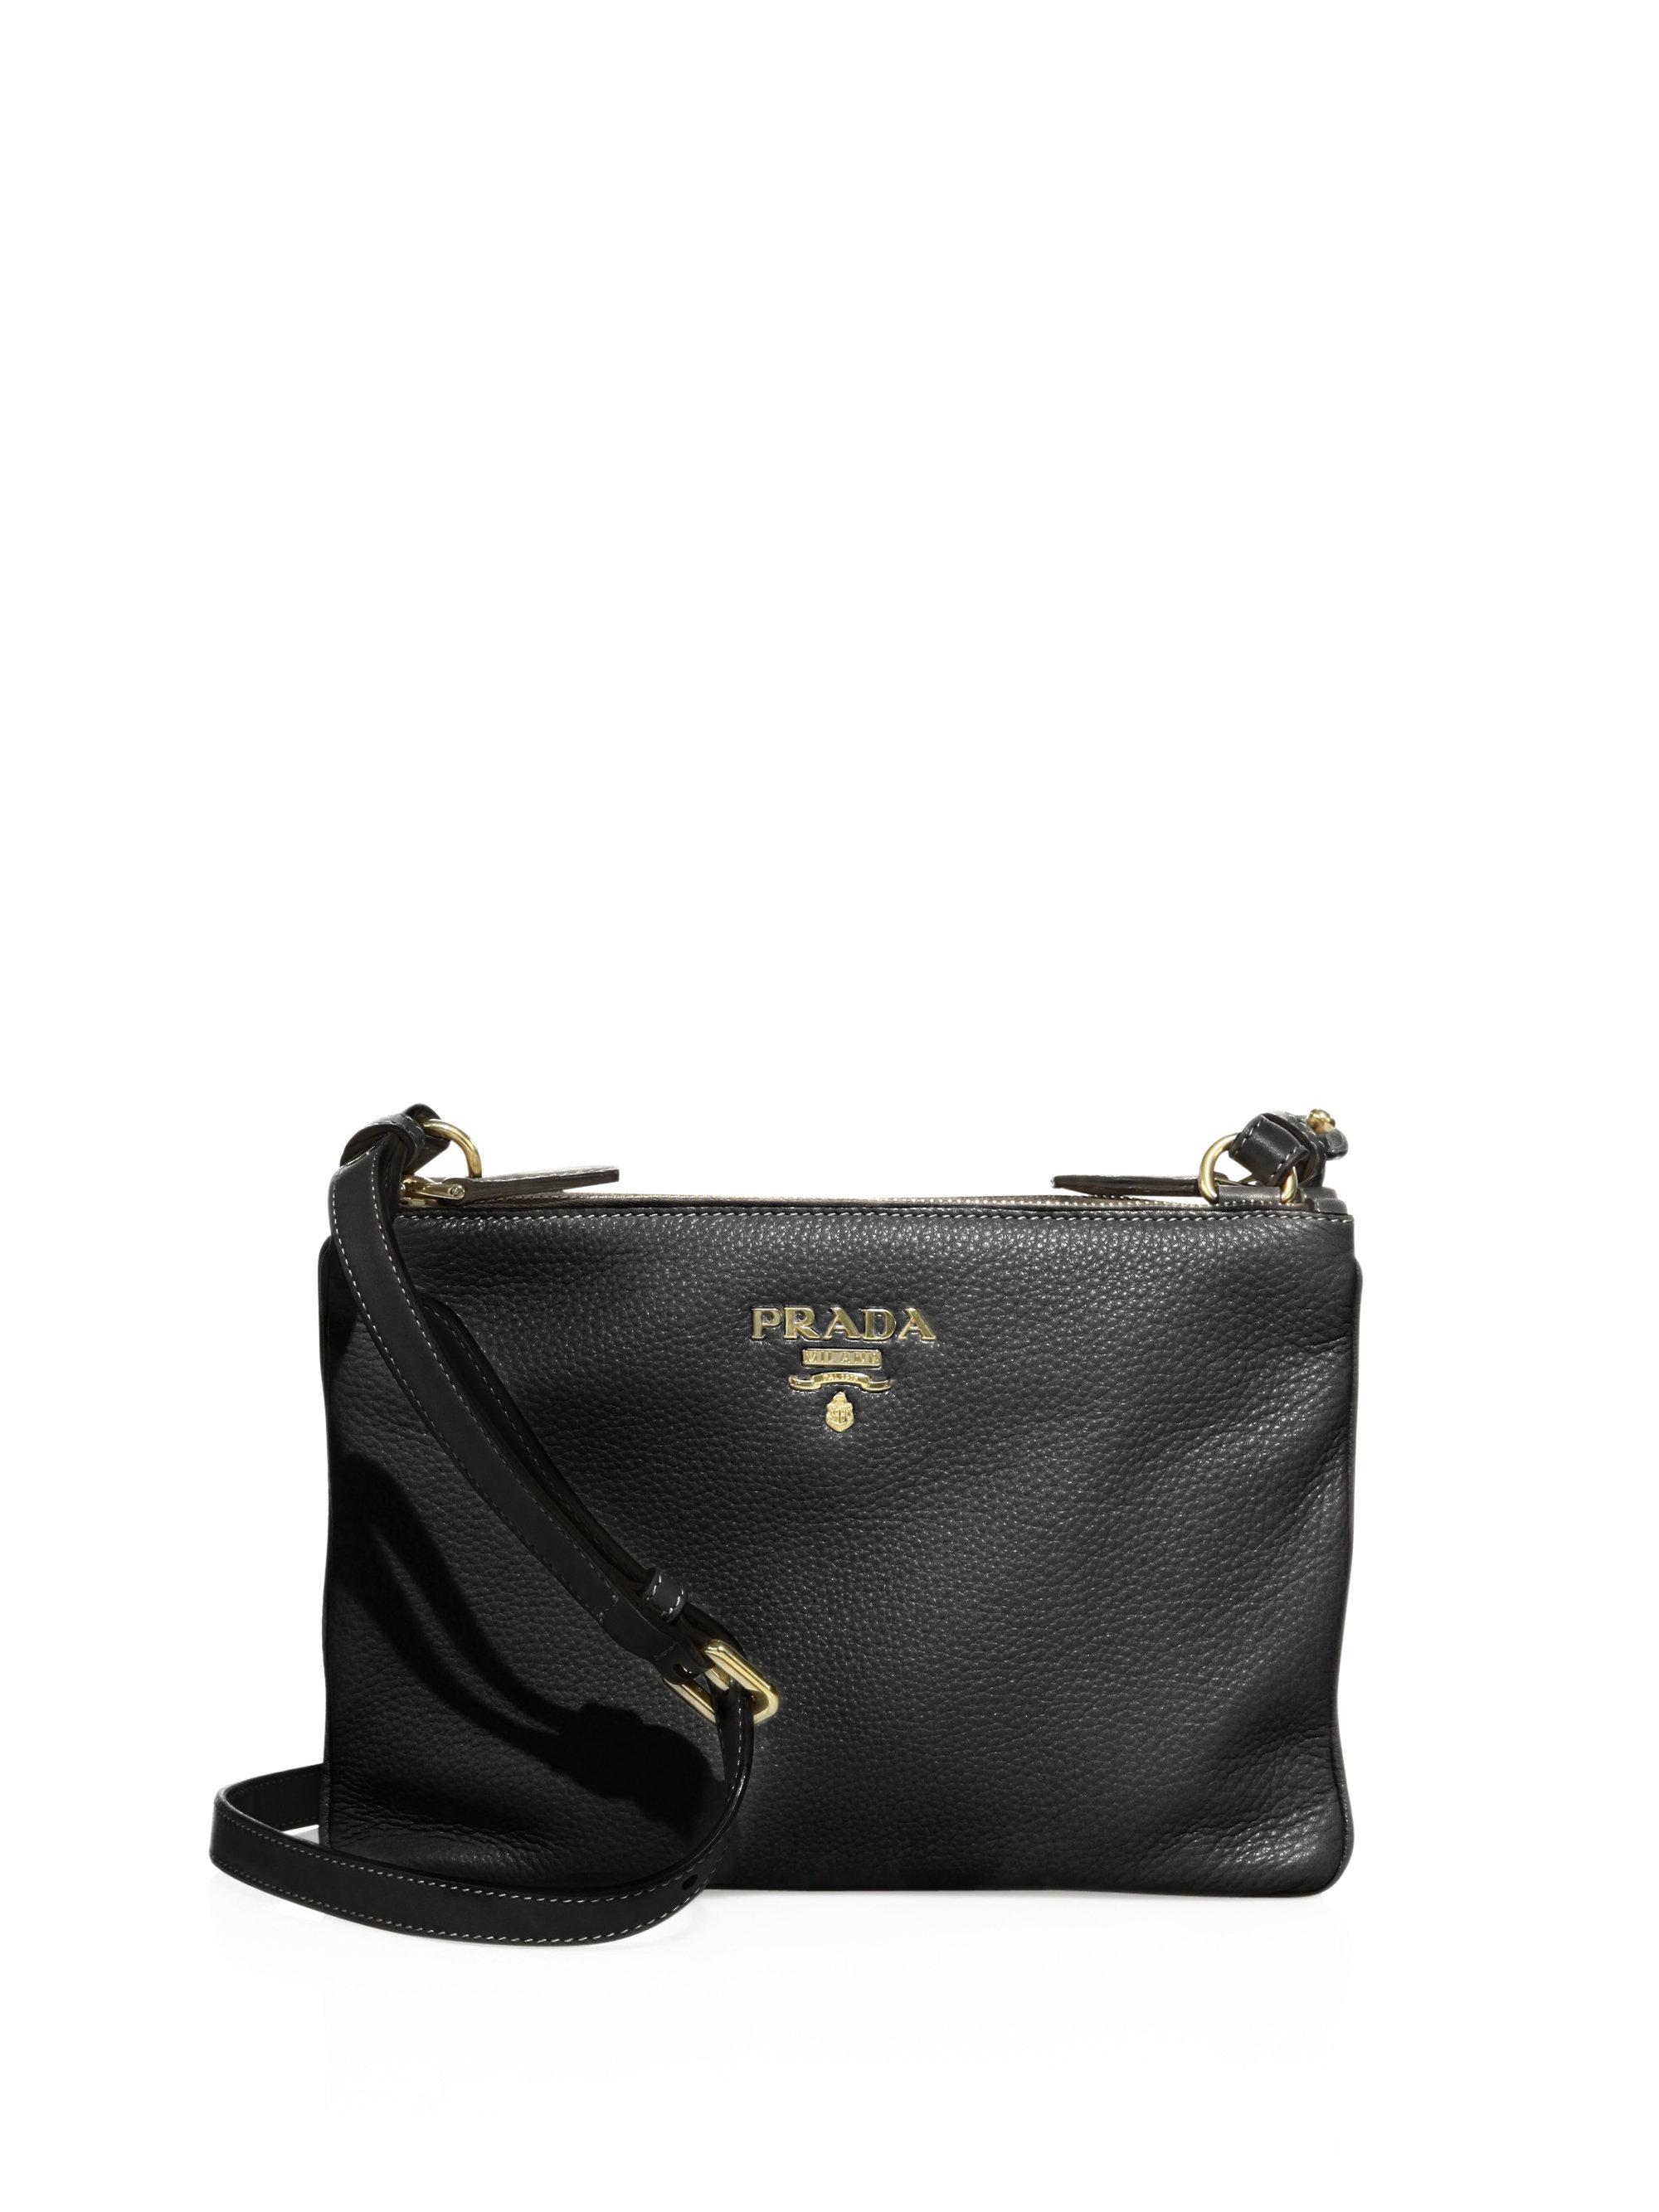 Lyst - Prada Daino Small Leather Cross-Body Bag in Black